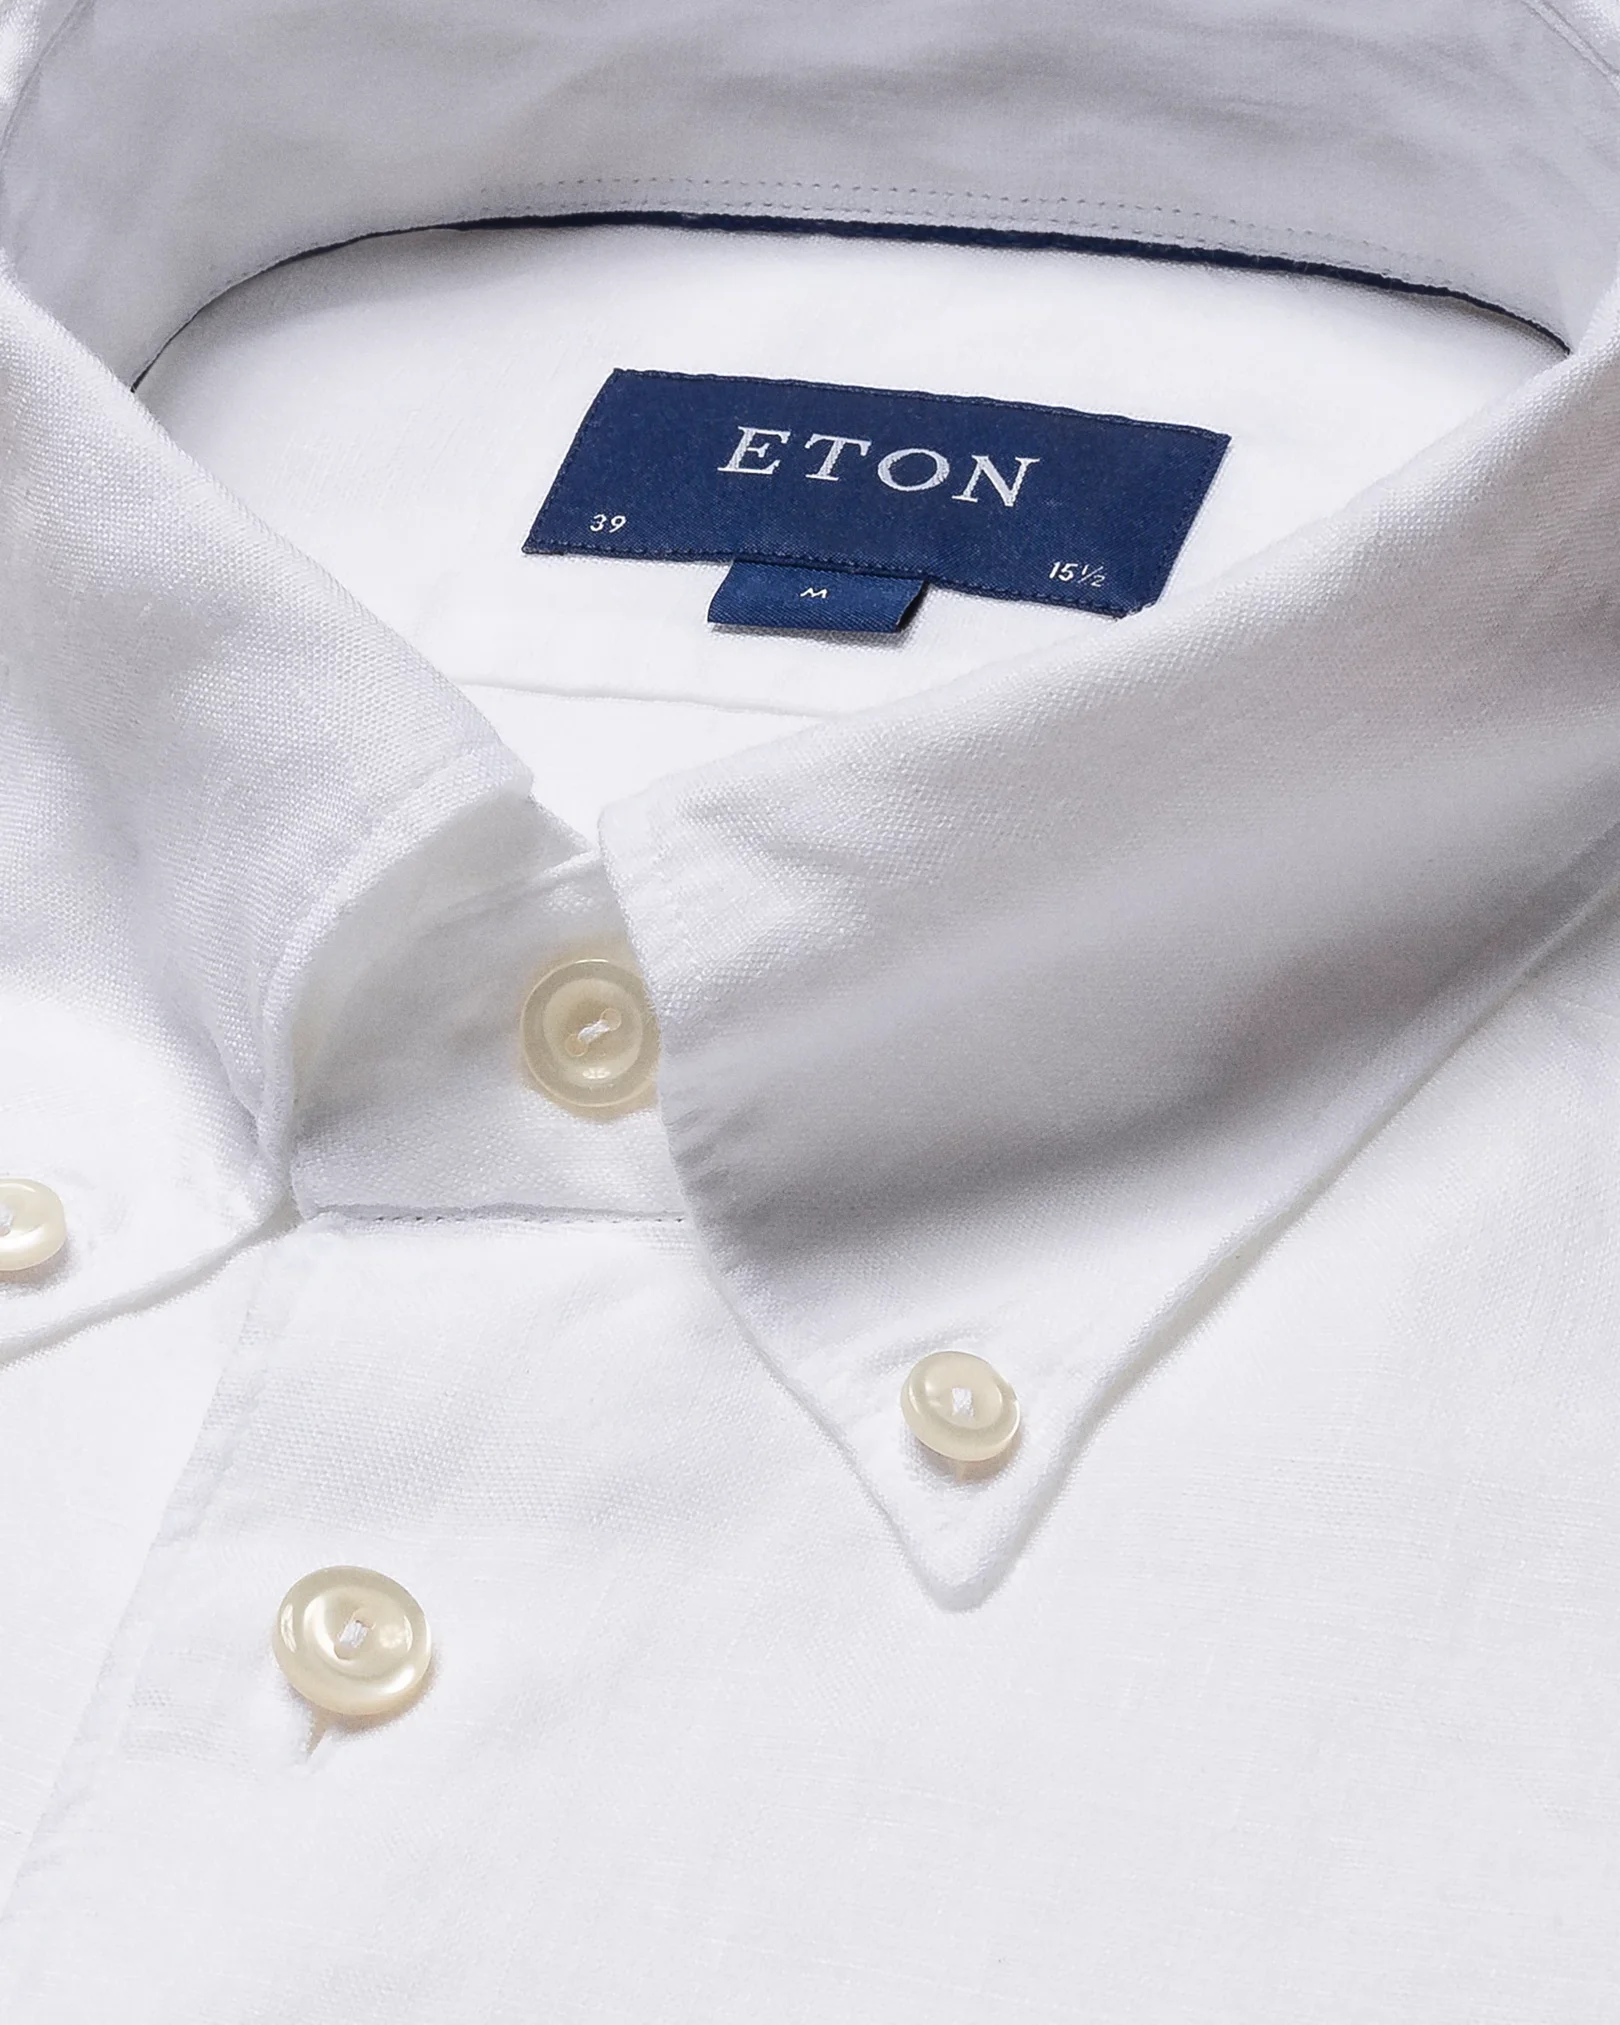 Eton - white linen shirt button down